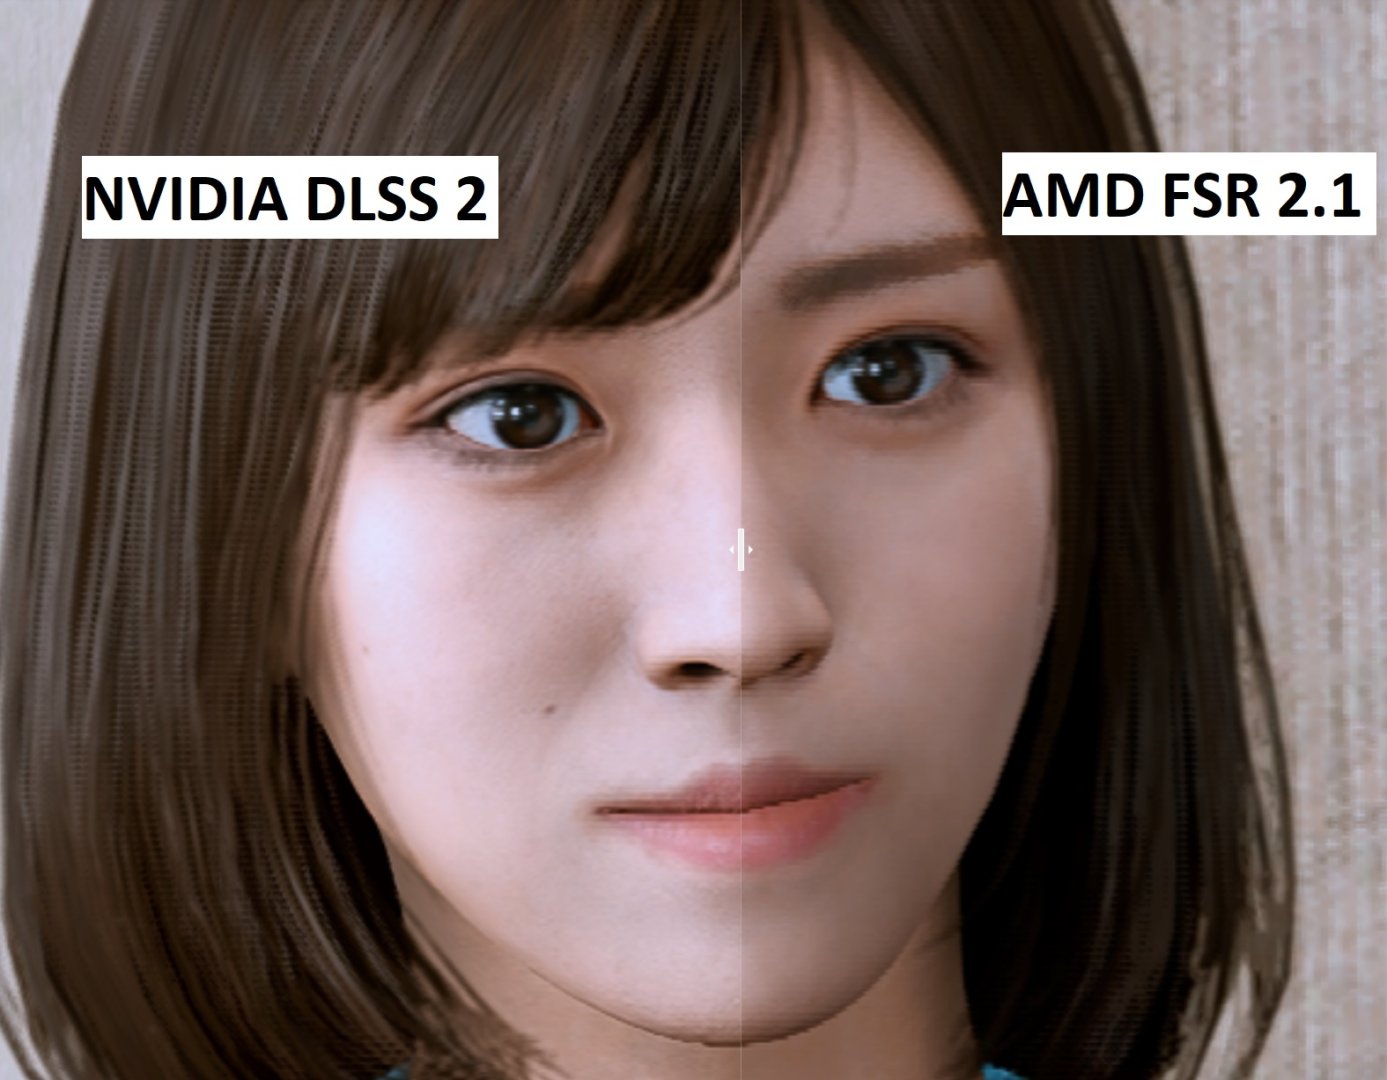 AMD FSR 2.1 vs NVIDIA DLSS 2 comparison zoom-2